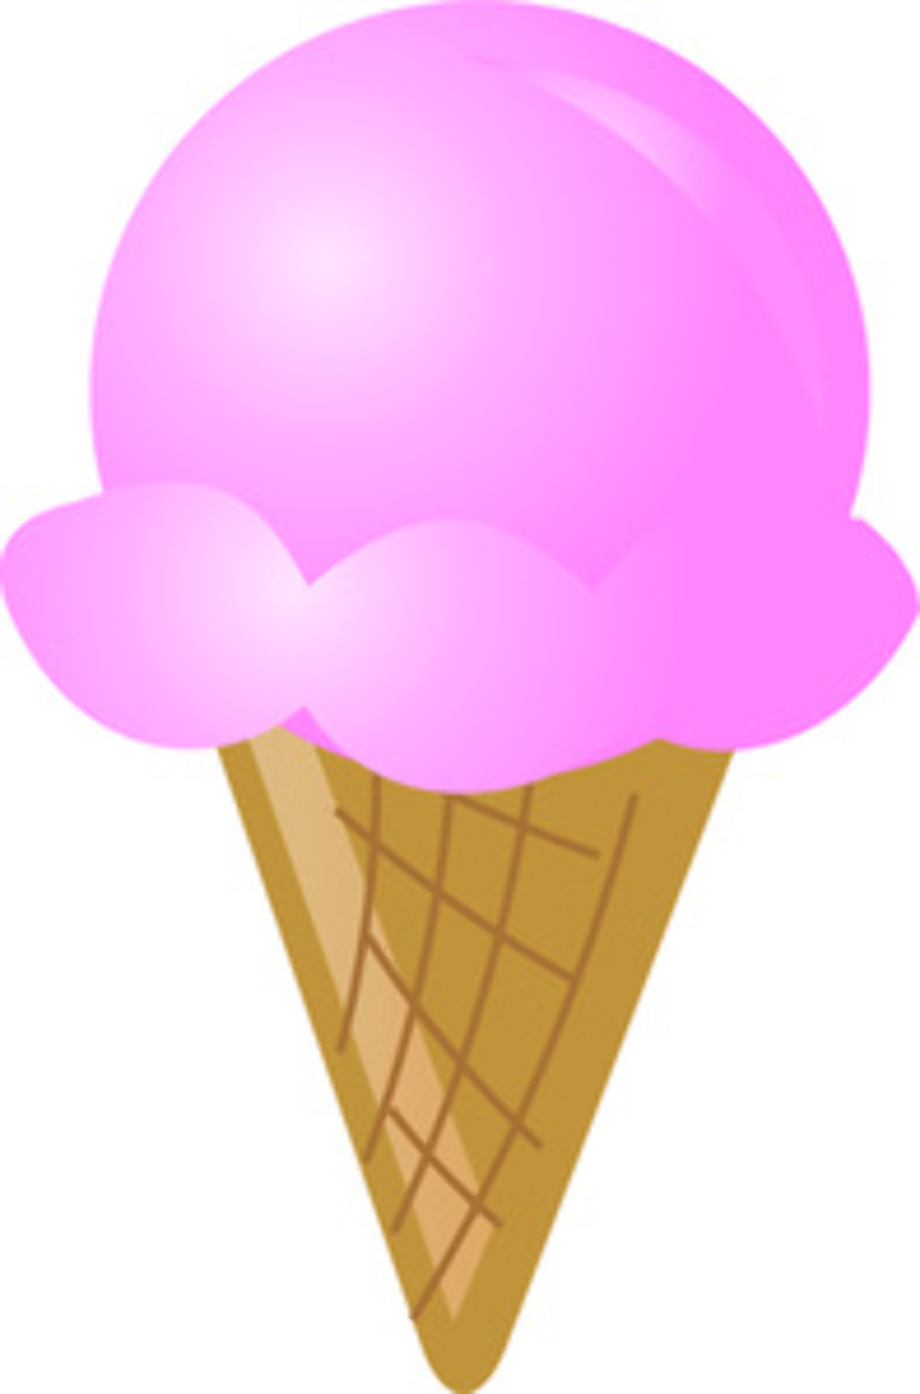 ice cream cone clipart pink